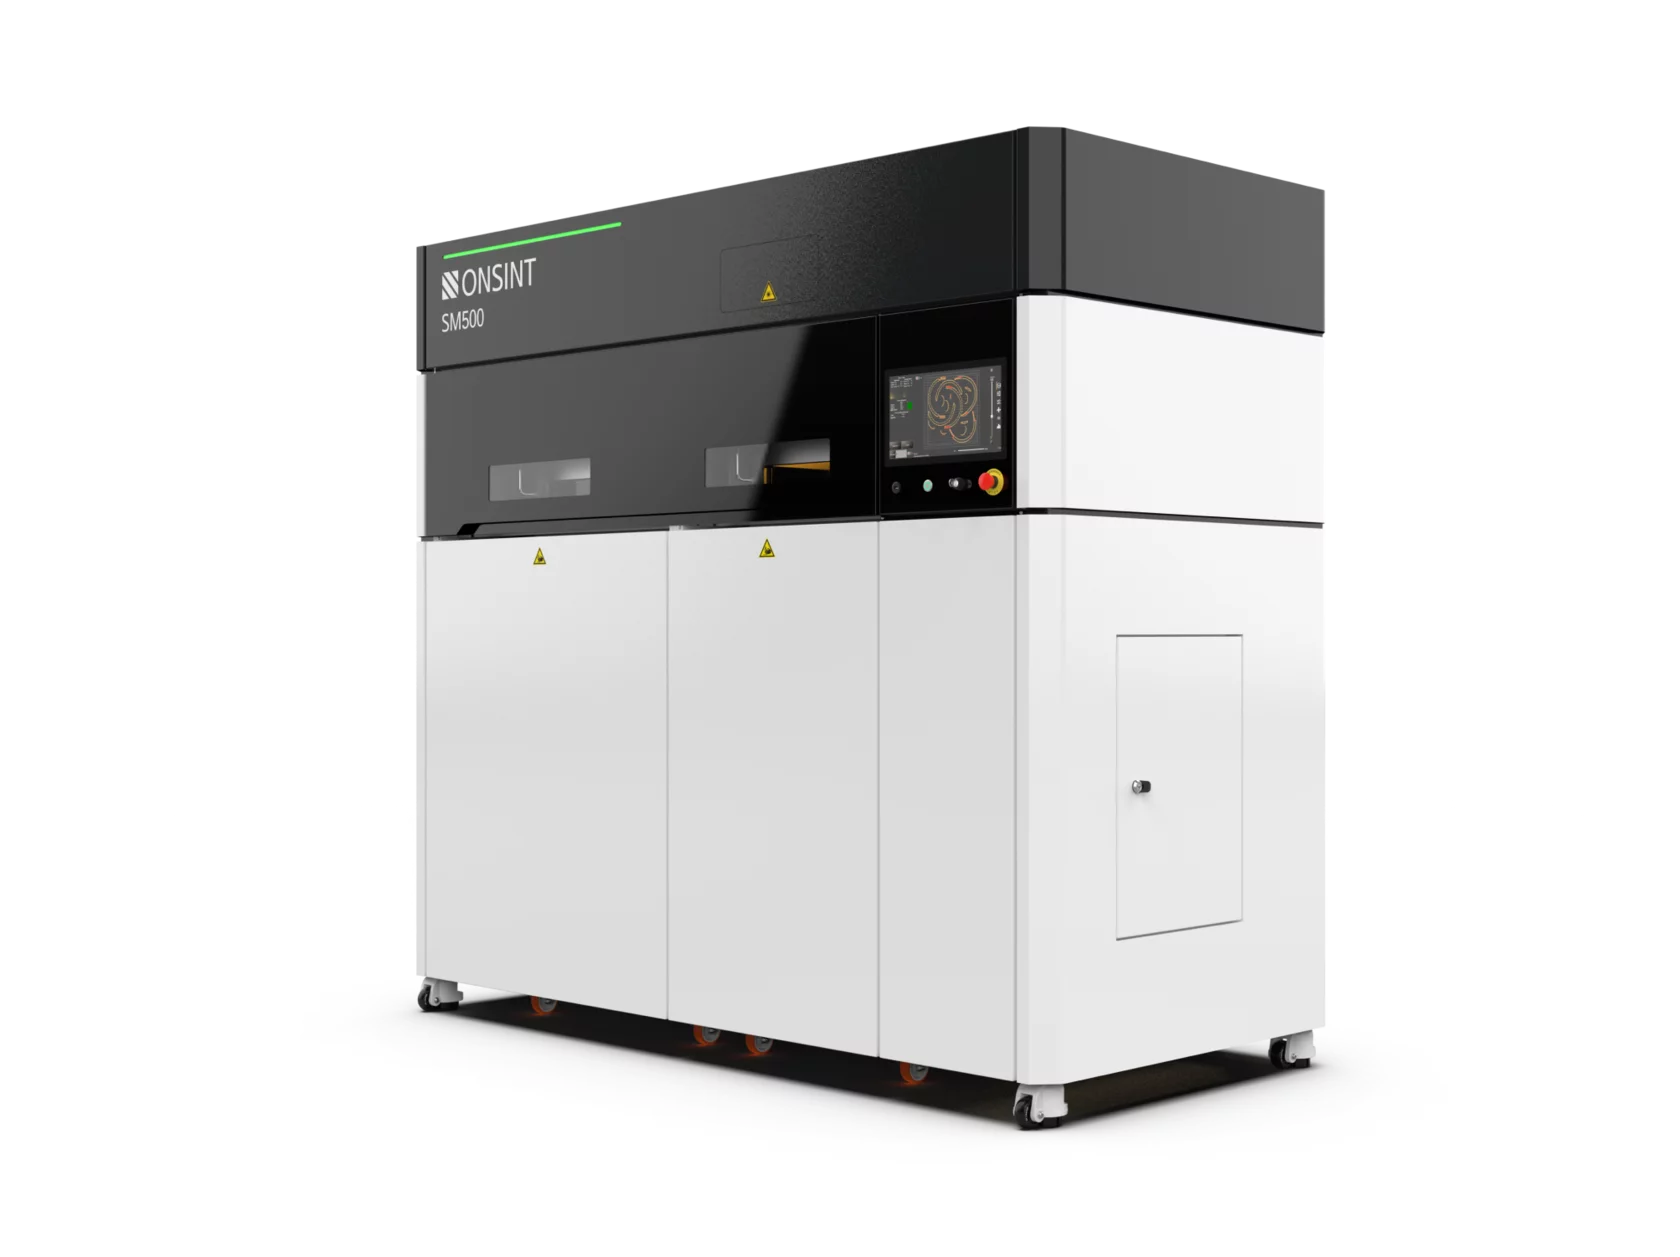 3D-Принтер Onsint SM500